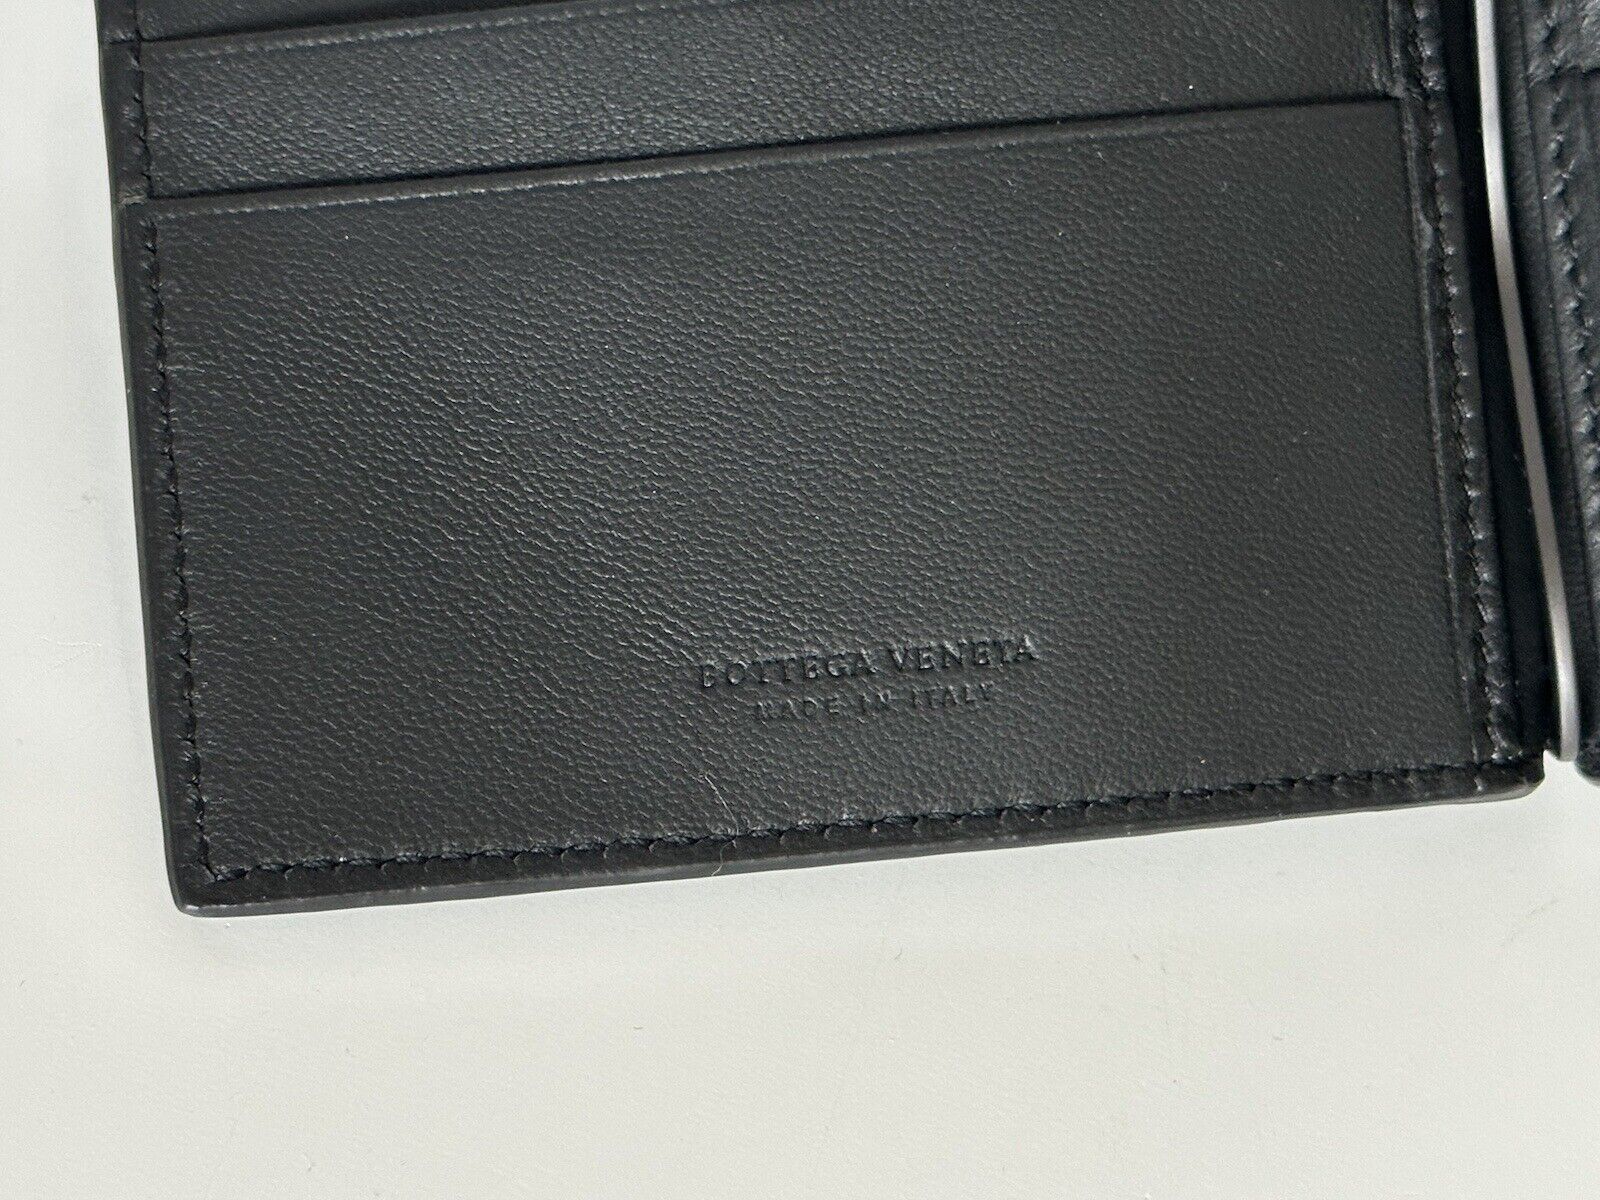 NWT Черный кошелек Bottega Veneta Intrecciato из кожи крокодила/наппа 700 долларов США 123180 IT